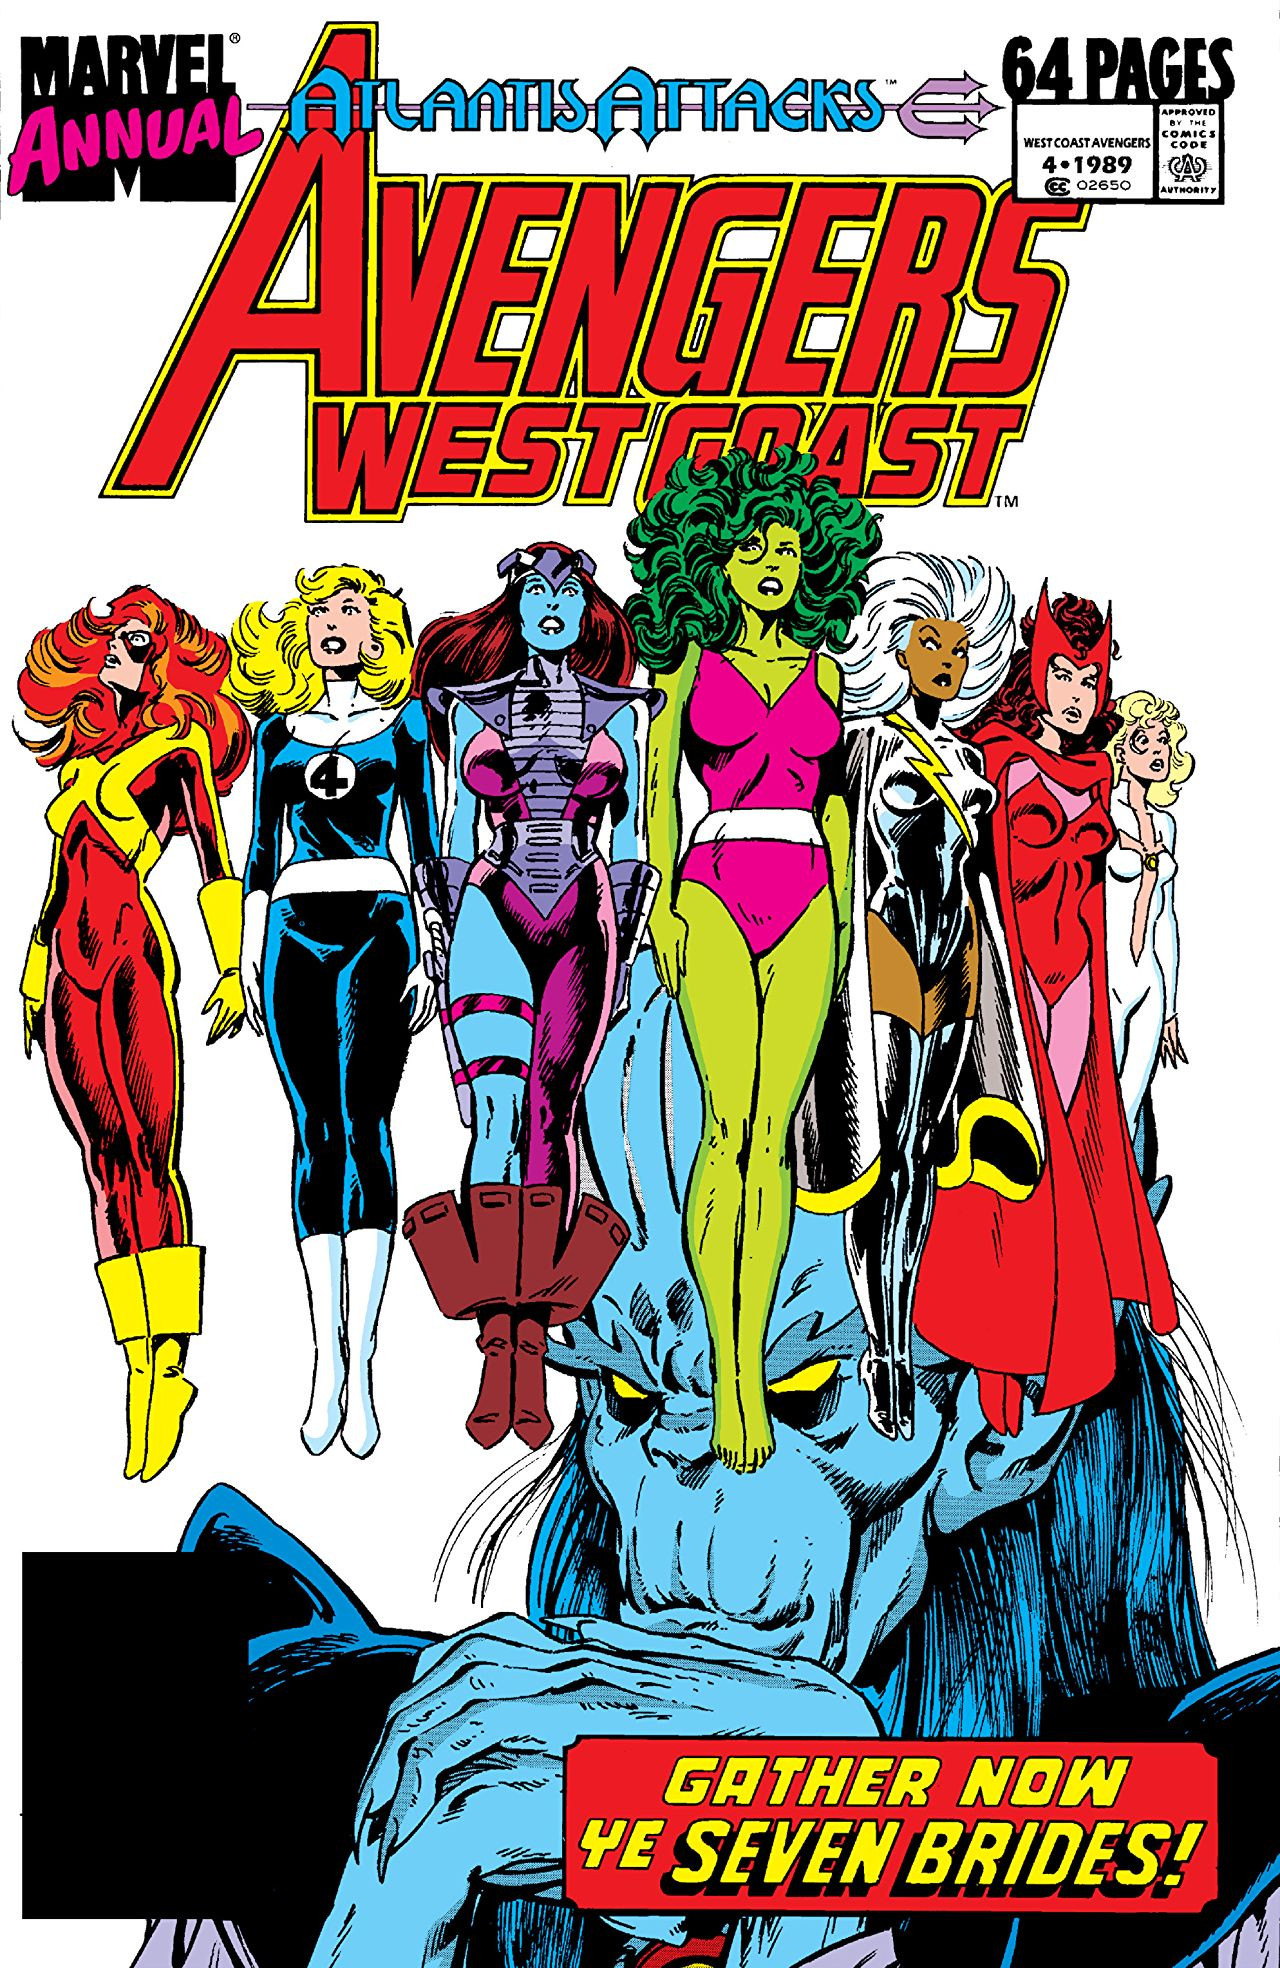 West Coast Avengers Annual Vol 1 4 | Marvel Database | Fandom